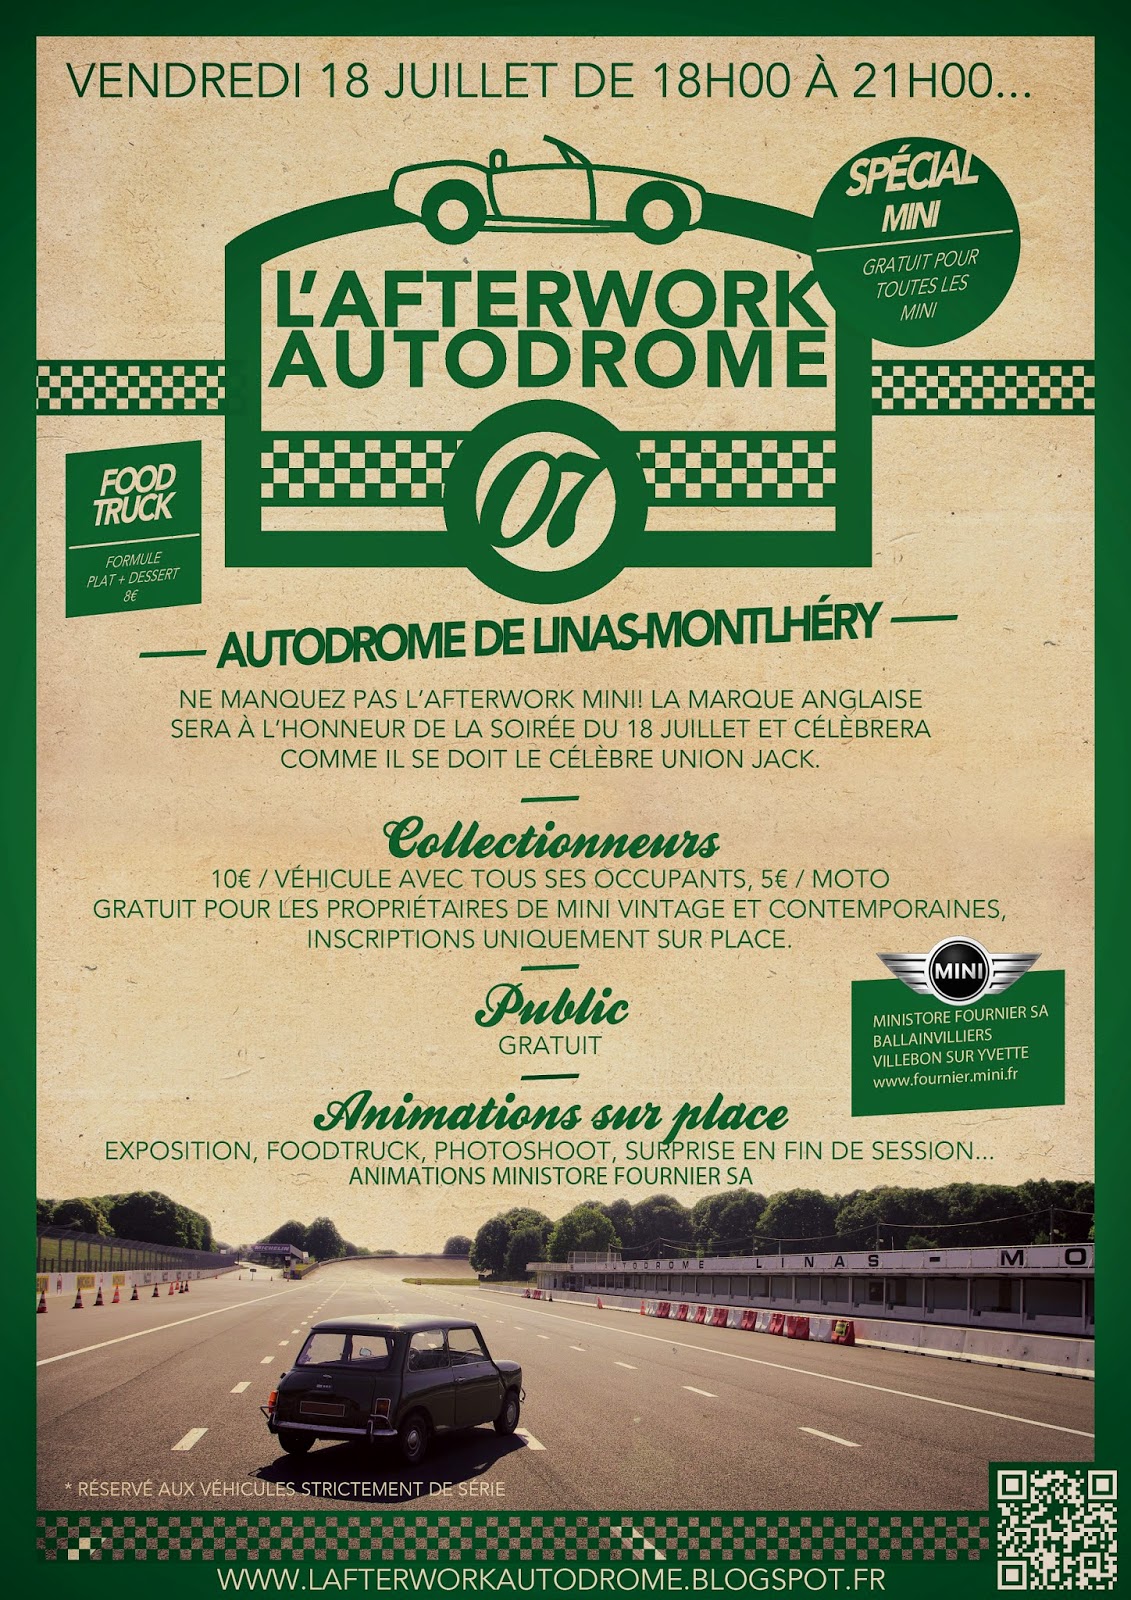 http://lafterworkautodrome.blogspot.fr/2014/07/afterwork-vendredi-18-juillet-mini-en.html?spref=bl